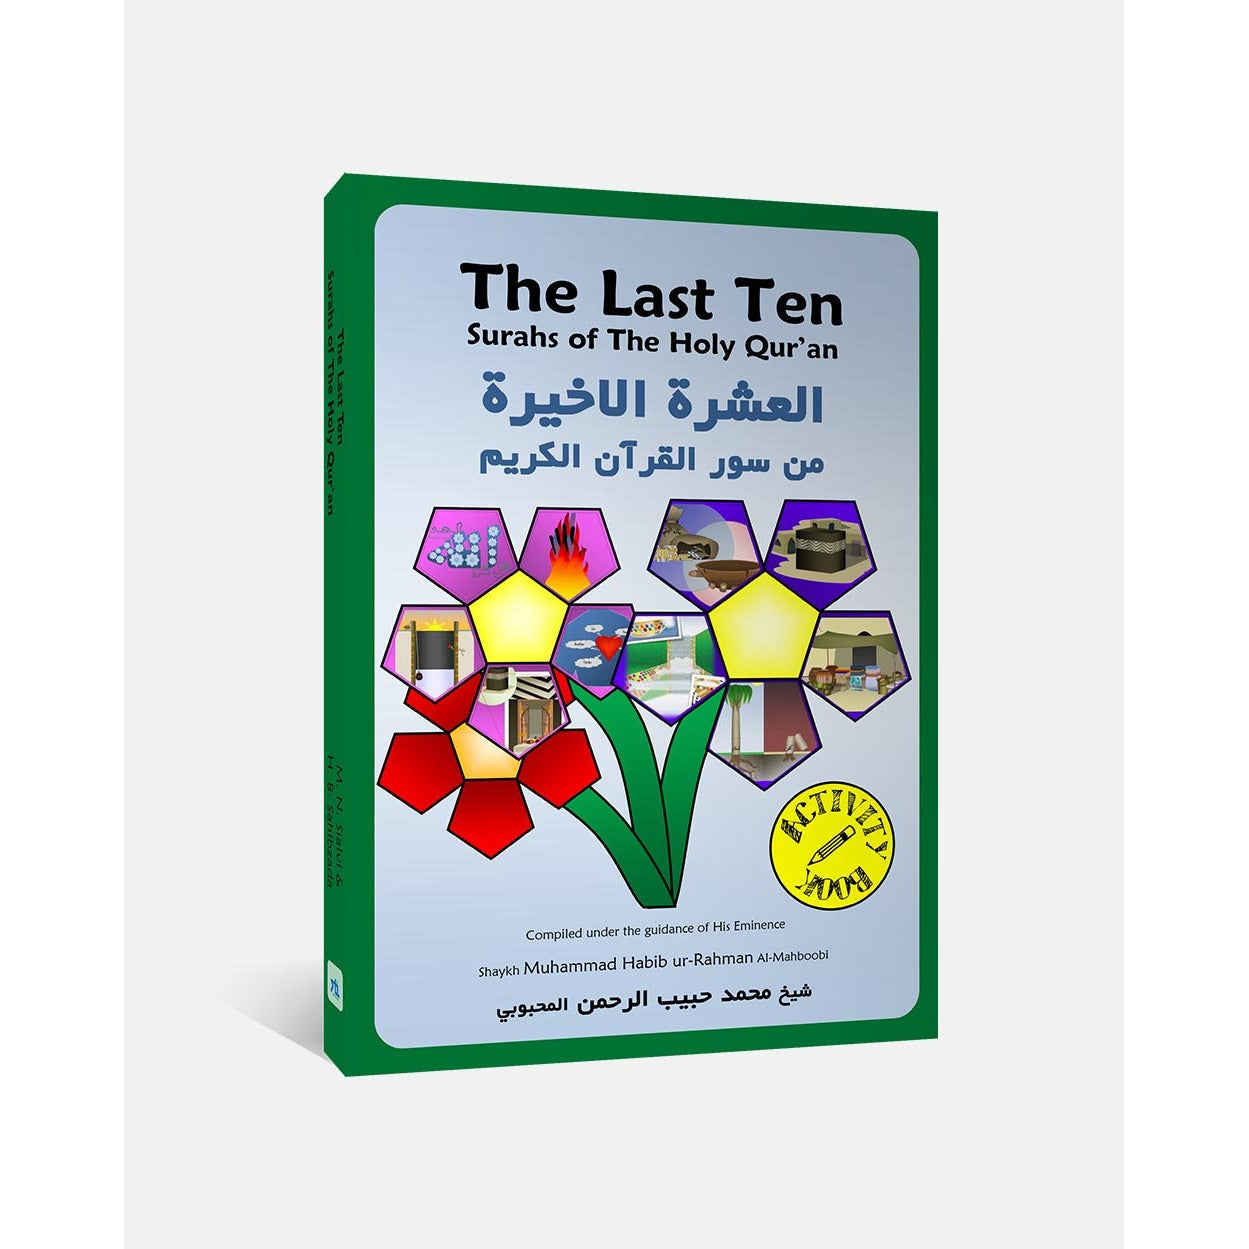 The Last Ten Surahs of the Holy Qur'an